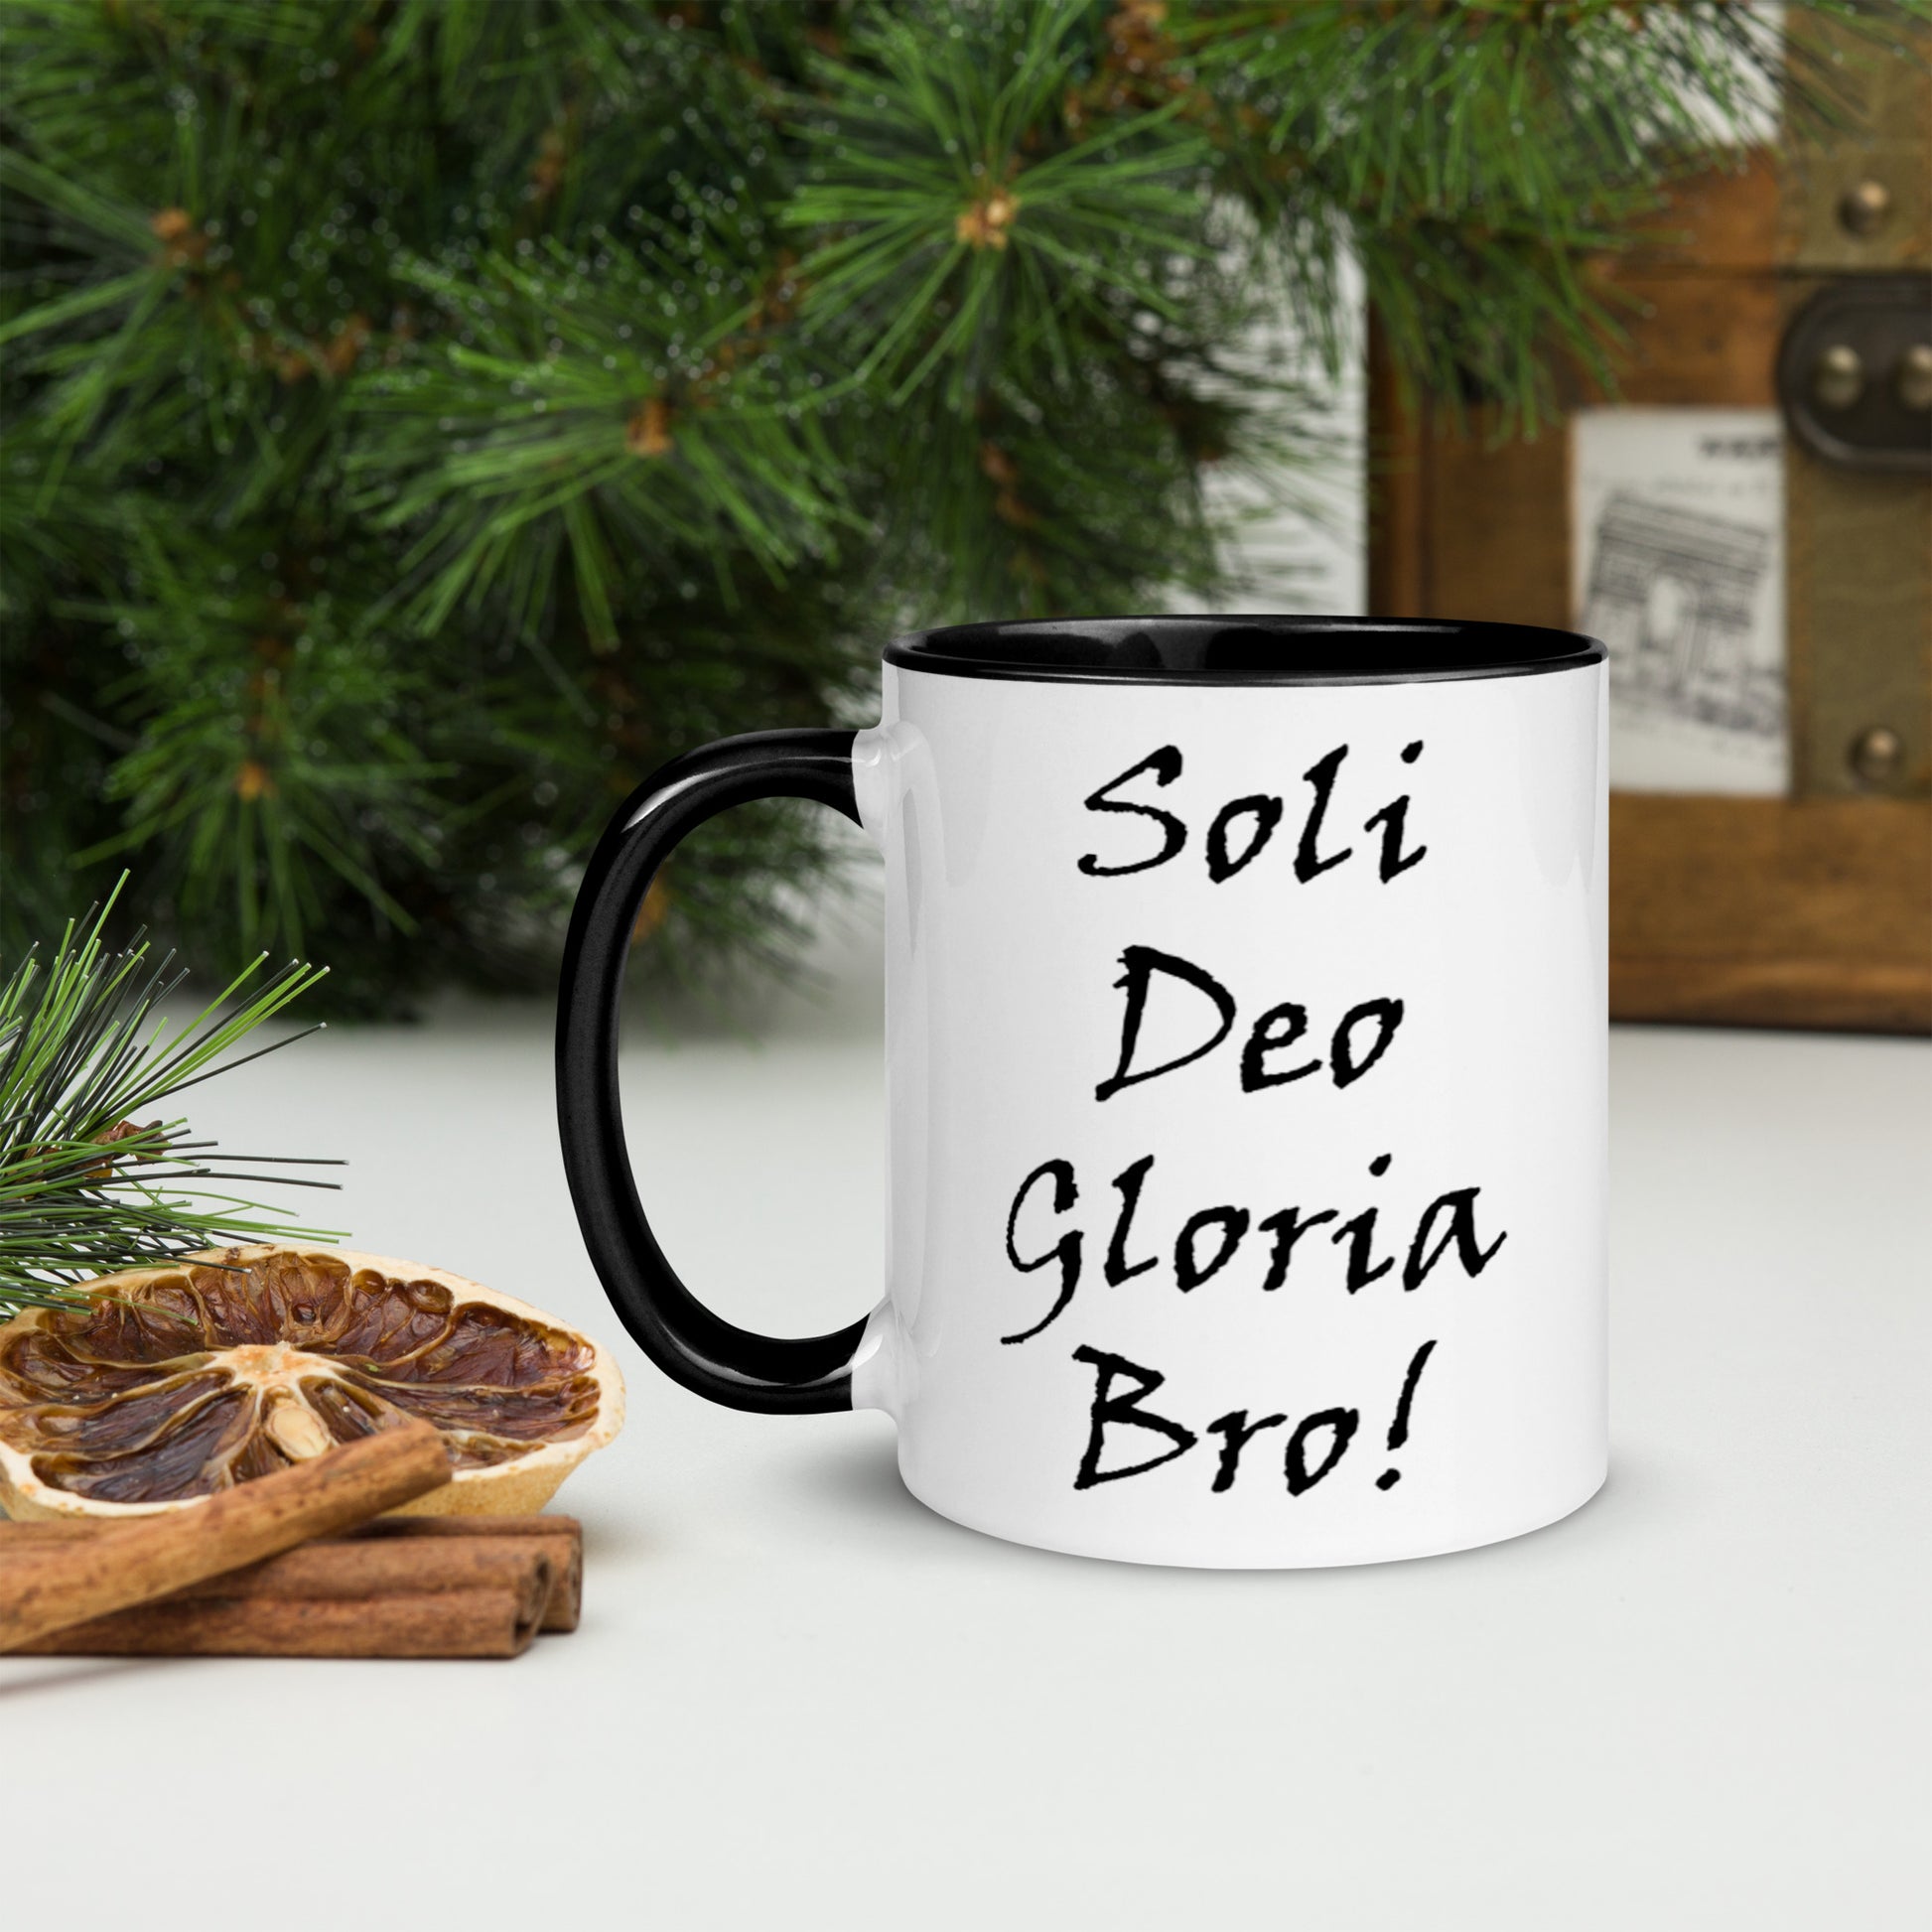 Soli Deo Gloria Bro! White Mug w/ Color - Solid Rock Designs | Christian Apparel